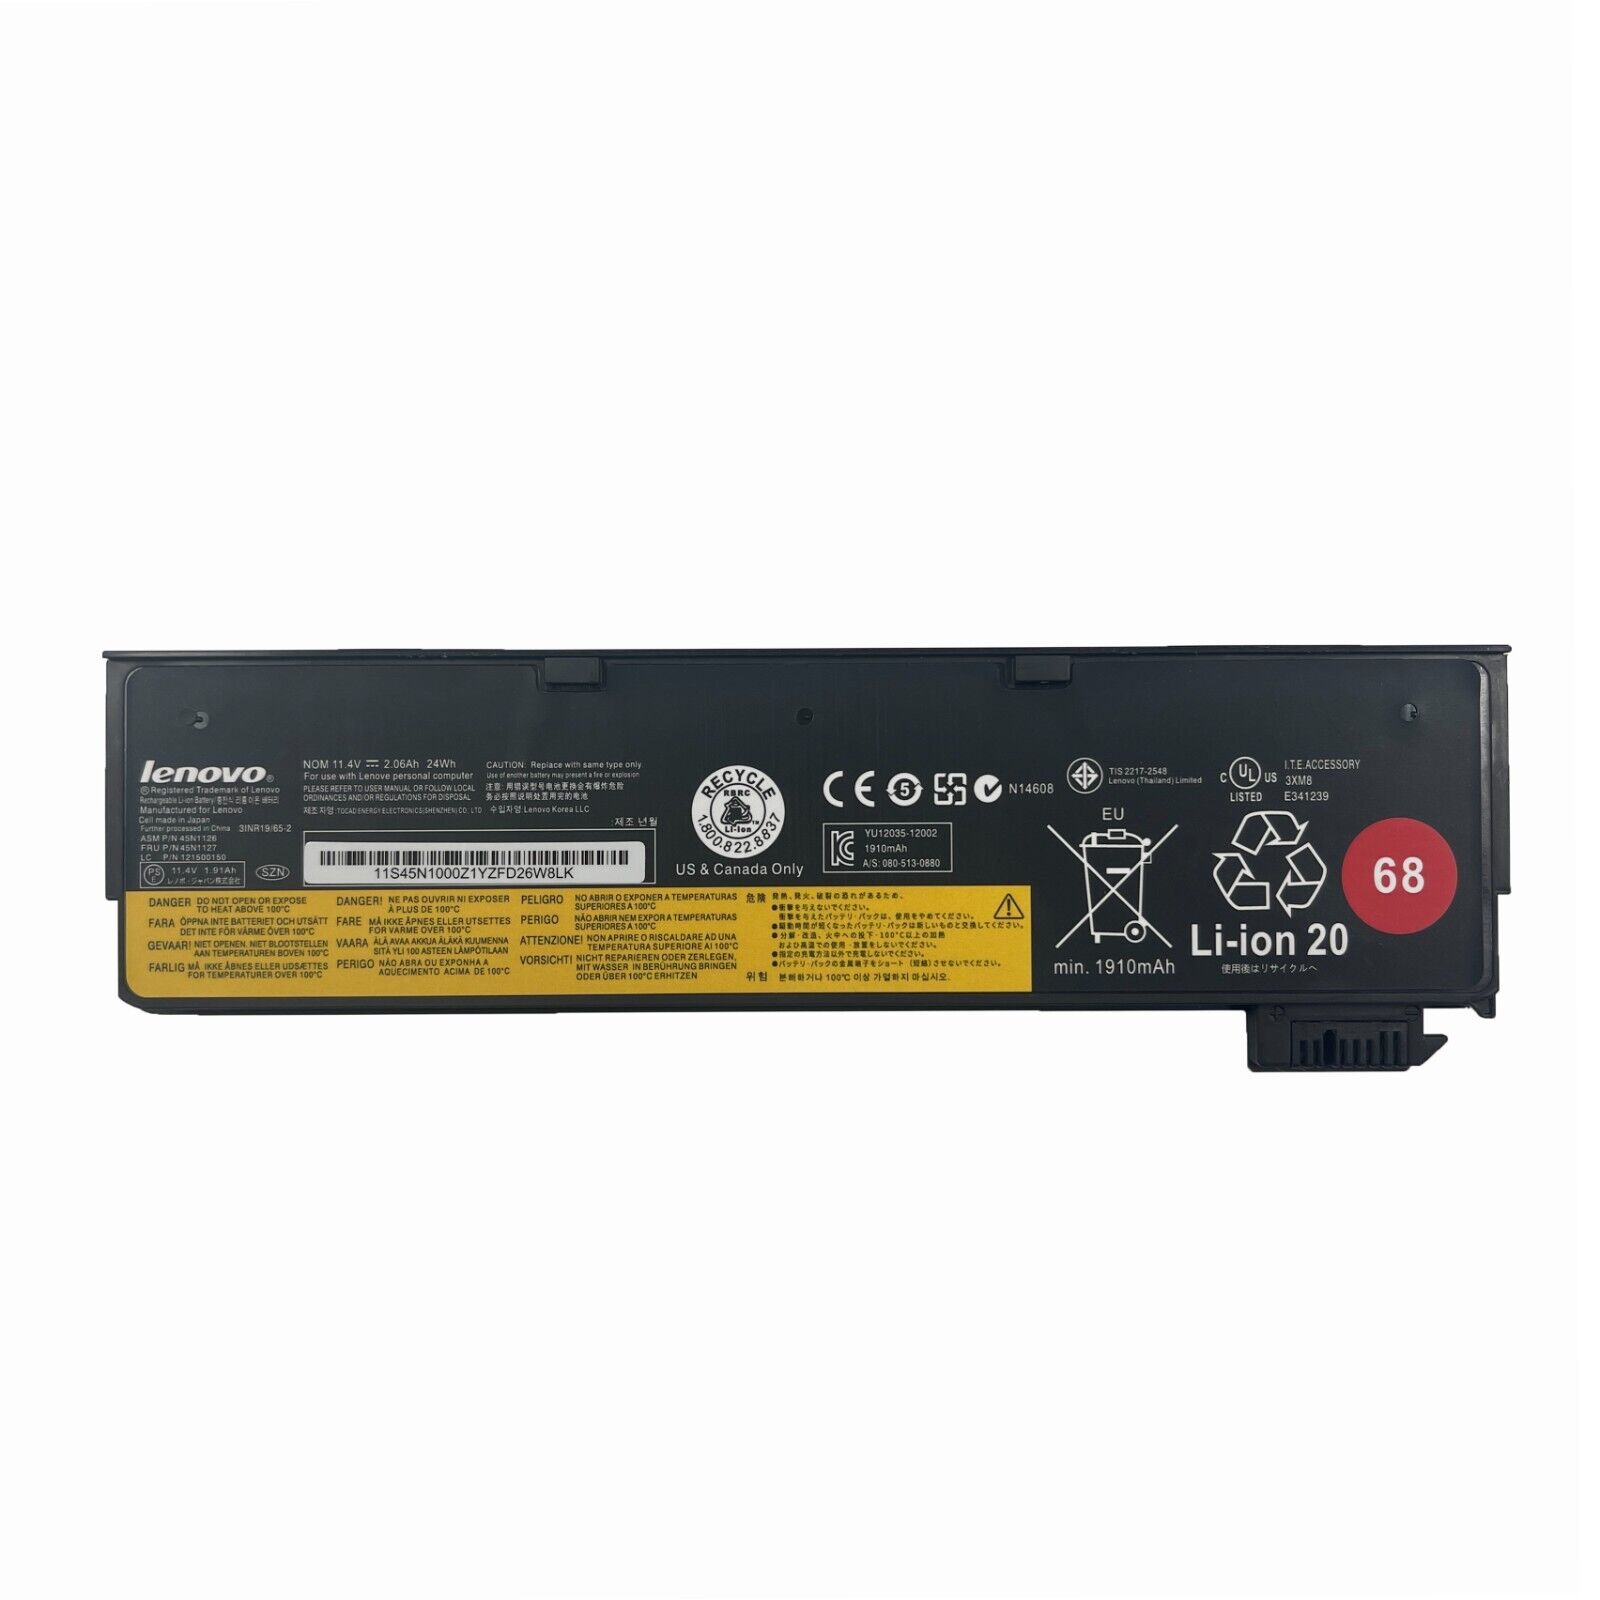 68 Genuine Battery For Lenovo ThinkPad X240 X240S X250 X260 X270 T440 T440S T450